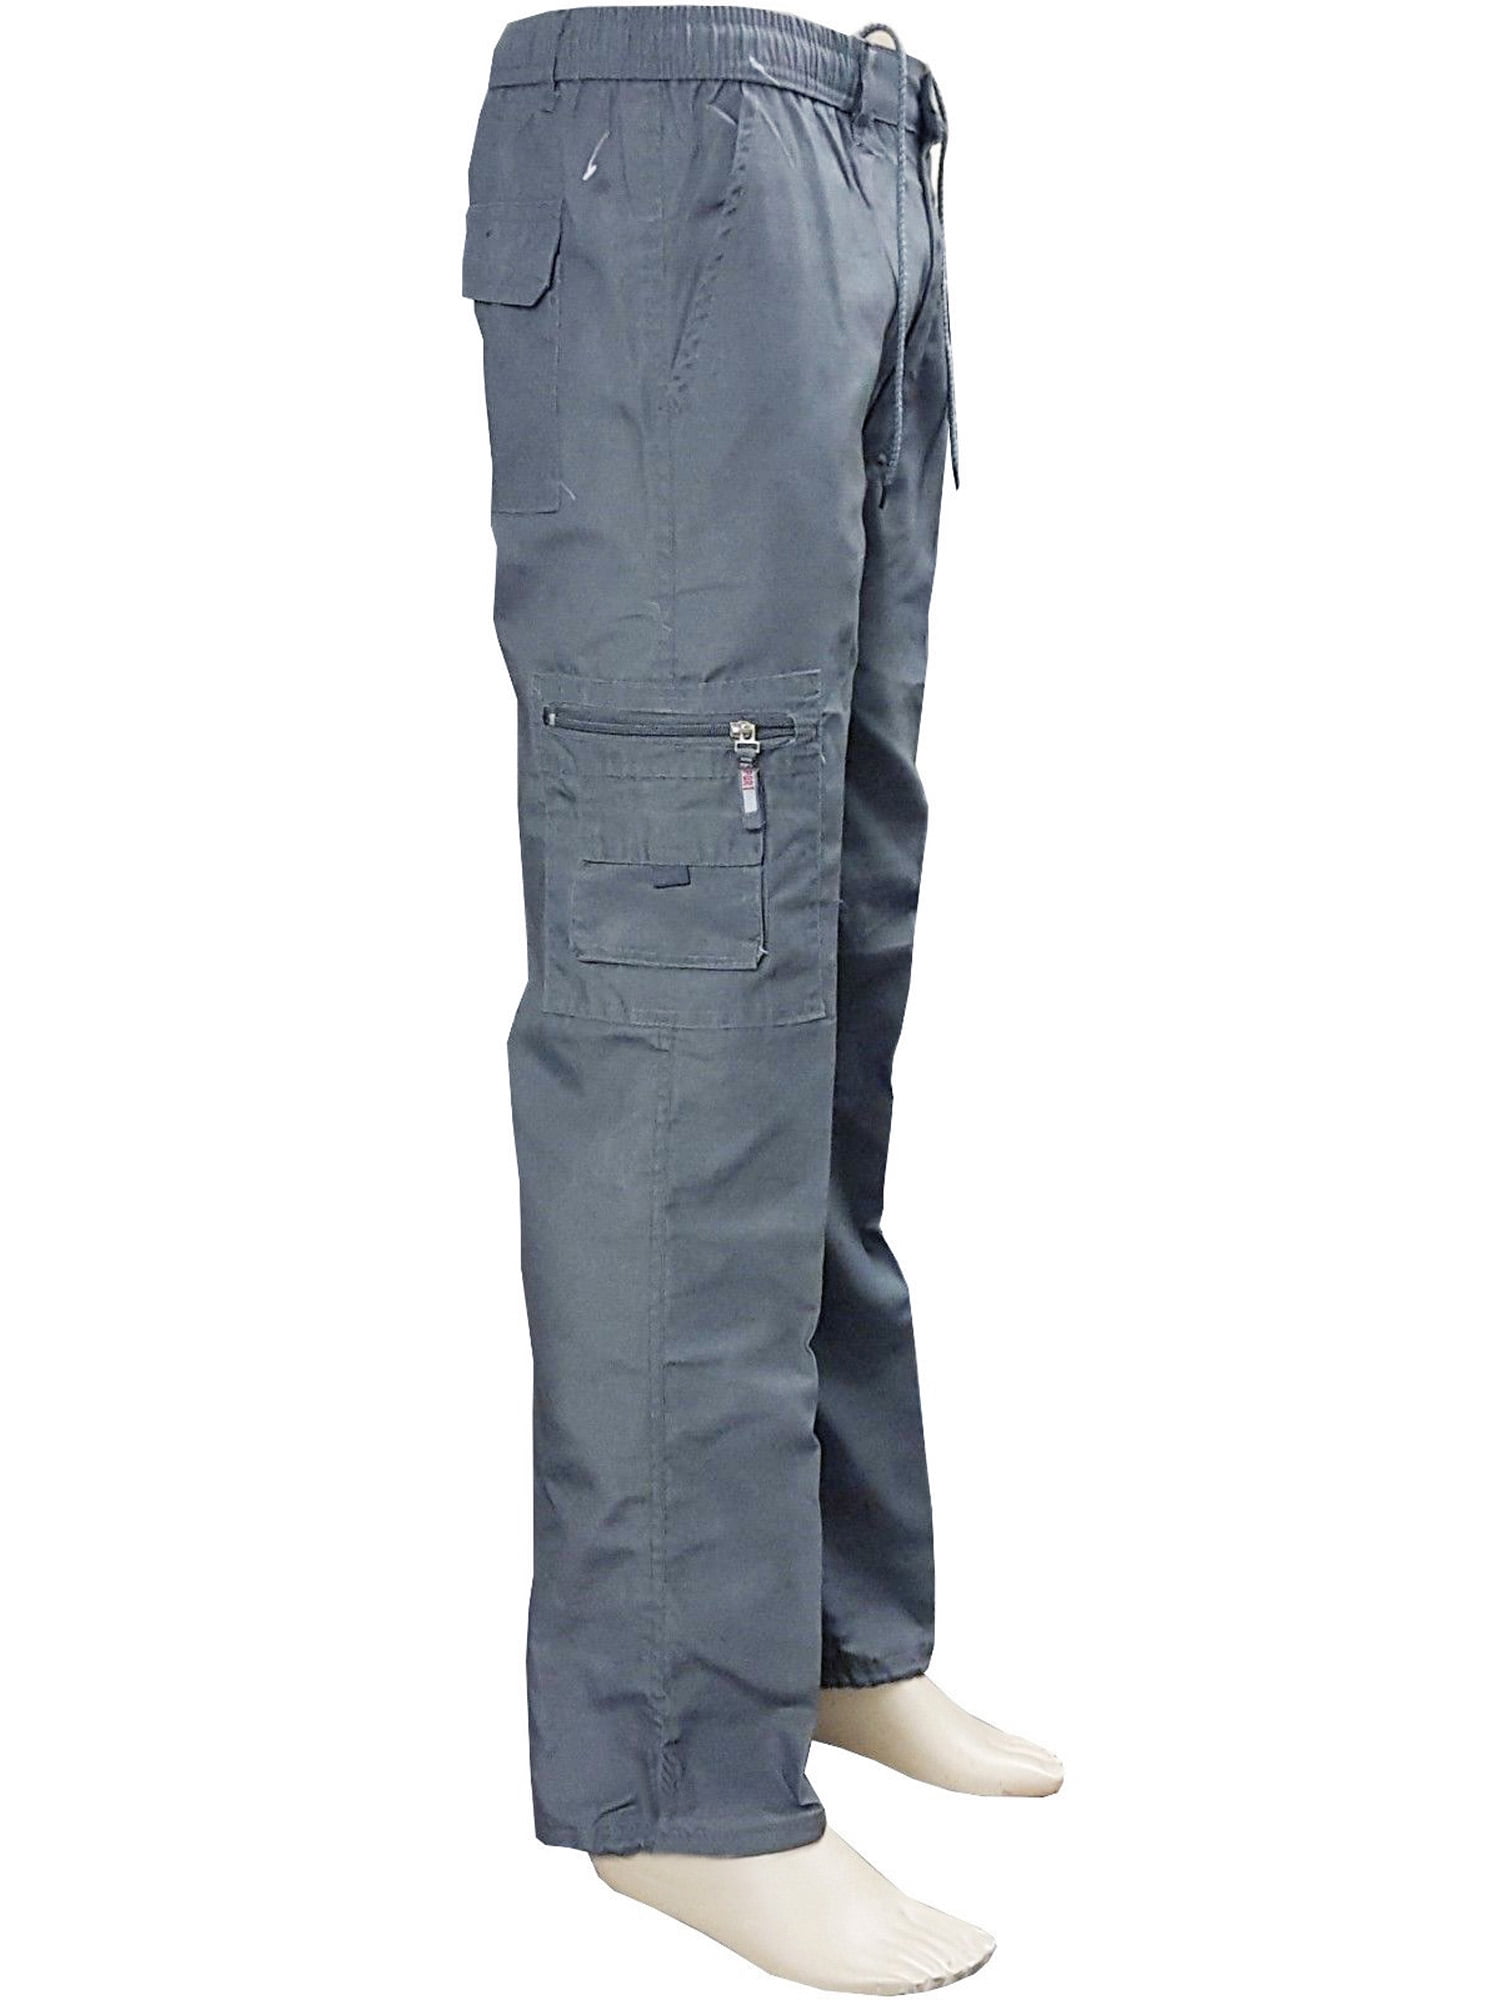 Work Trousers Mens Cargo Combat Style Heavy Duty Knee pads pockets Grey&orange 